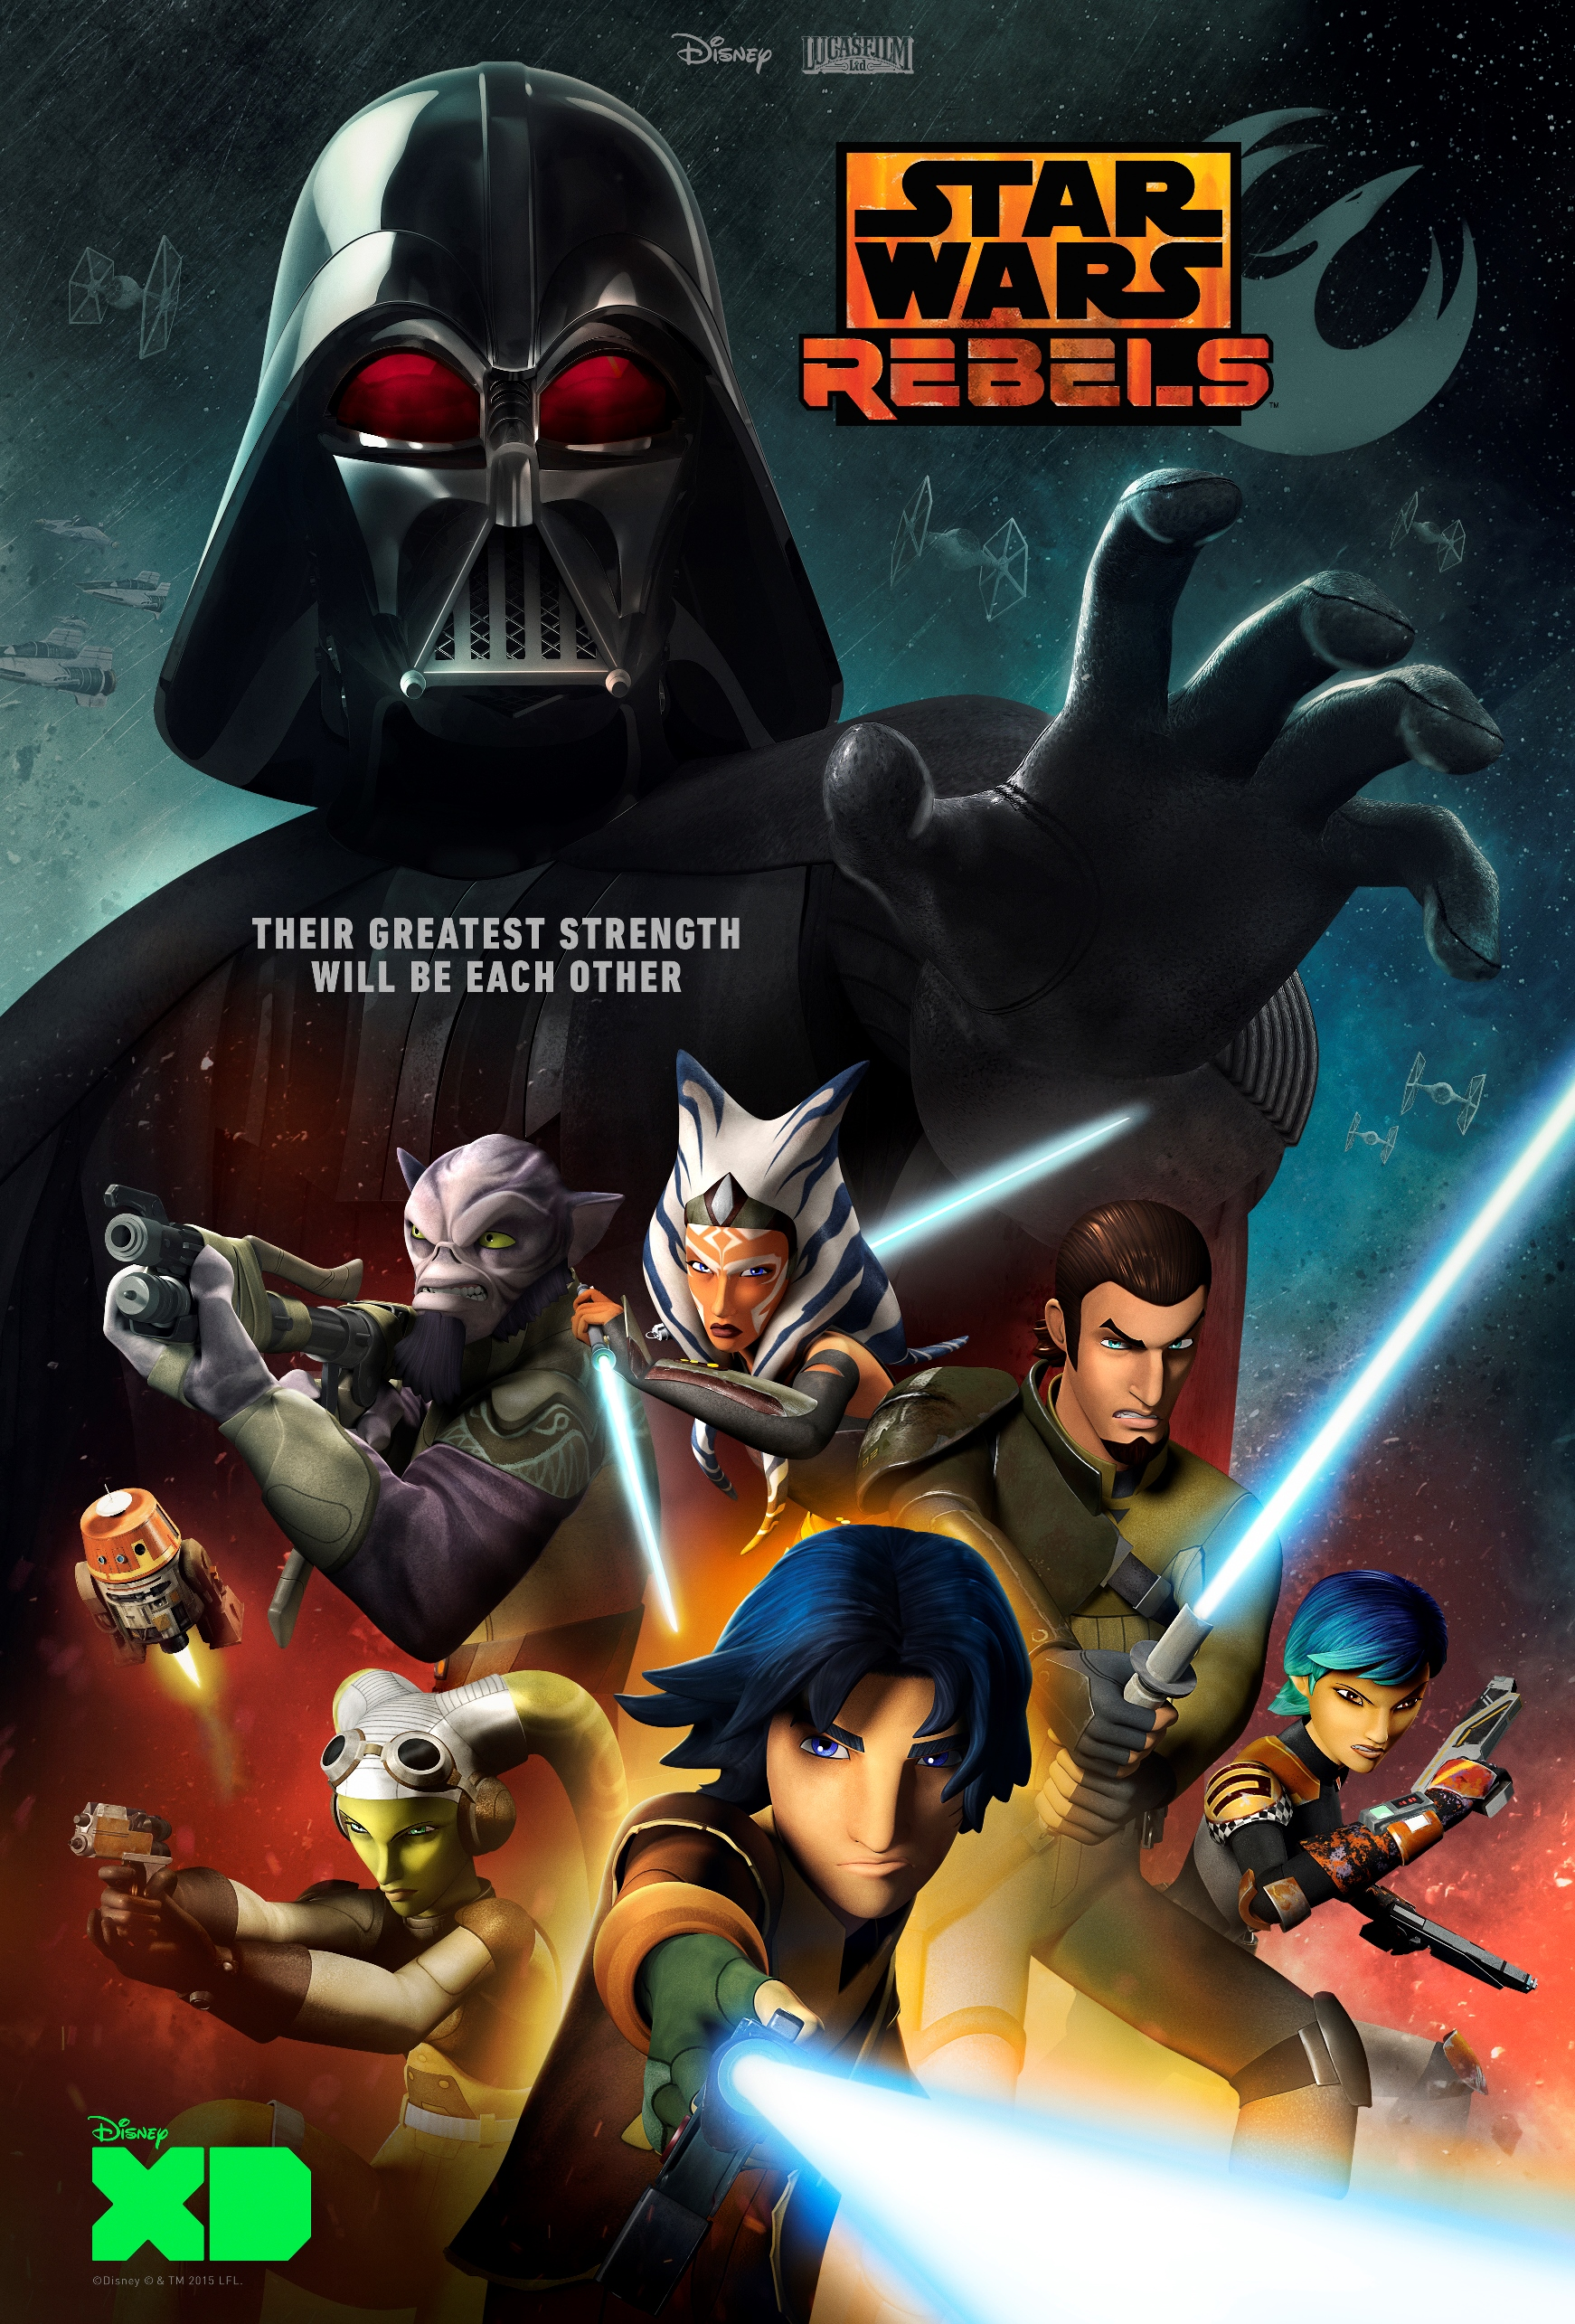 High Resolution Wallpaper | Star Wars Rebels 1742x2570 px